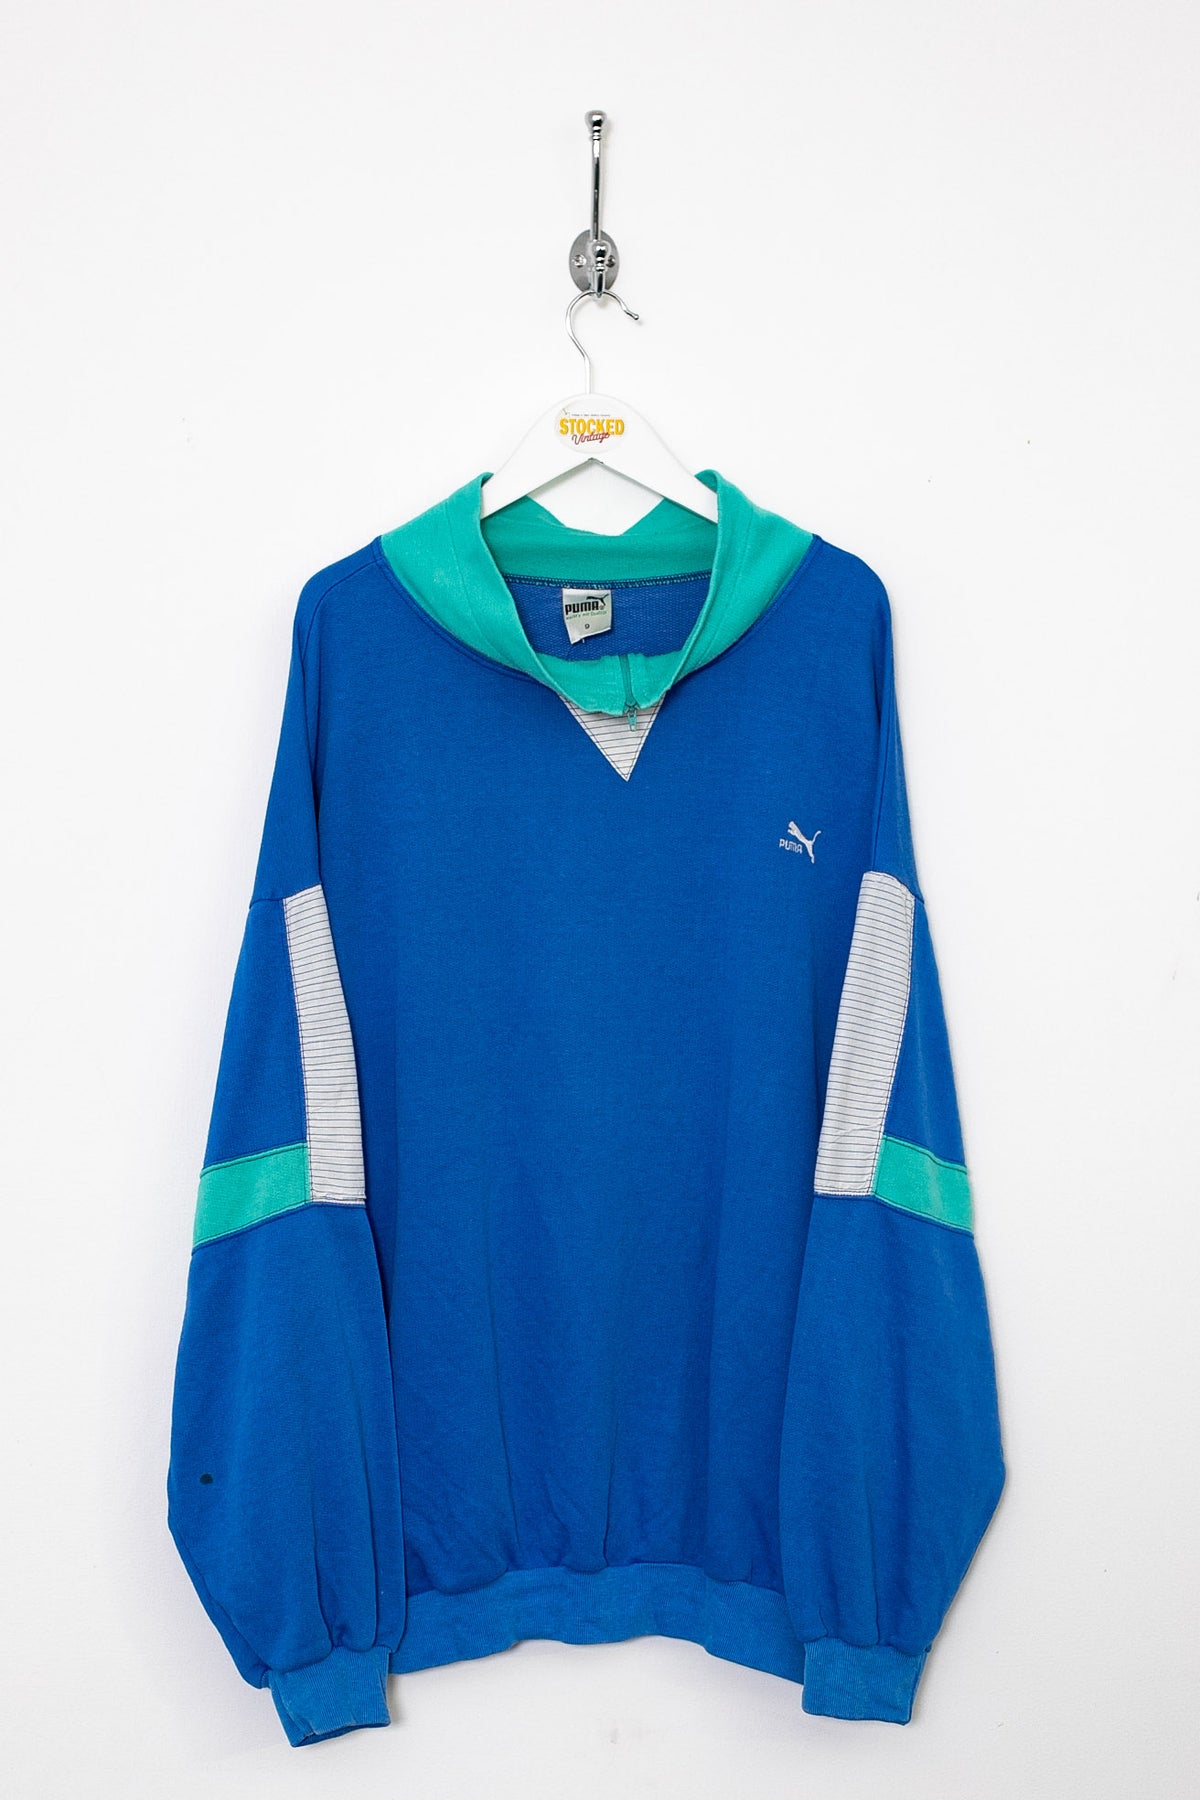 90s Puma 1/4 Zip Sweatshirt (XL)